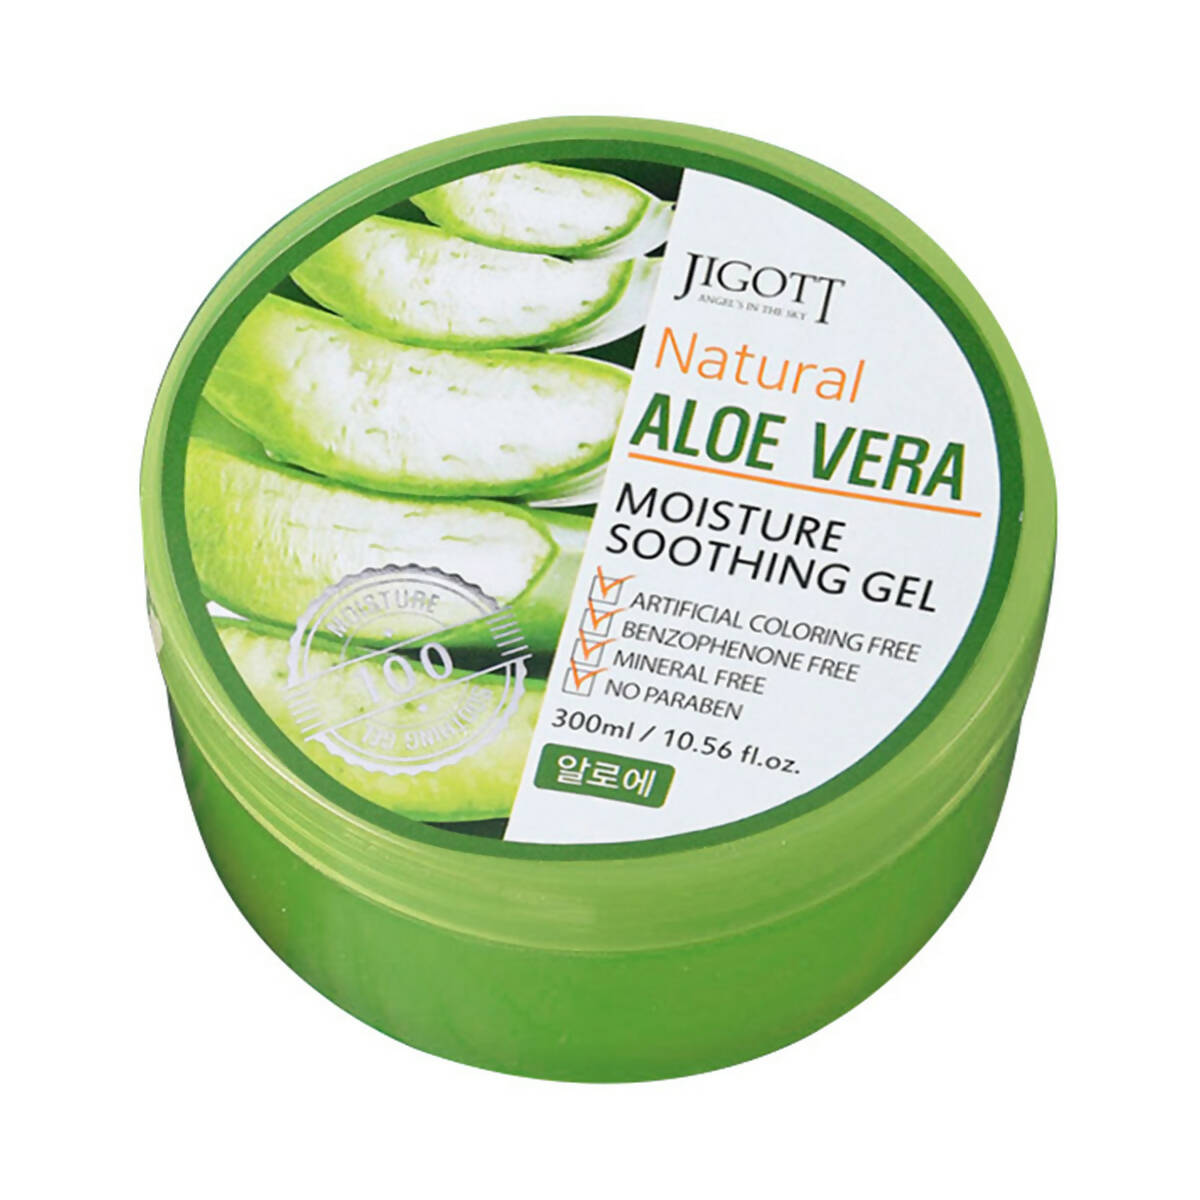 [Jigott] Natural Aloe Vera Moisture Soothing Gel 300ml (2 Pack)